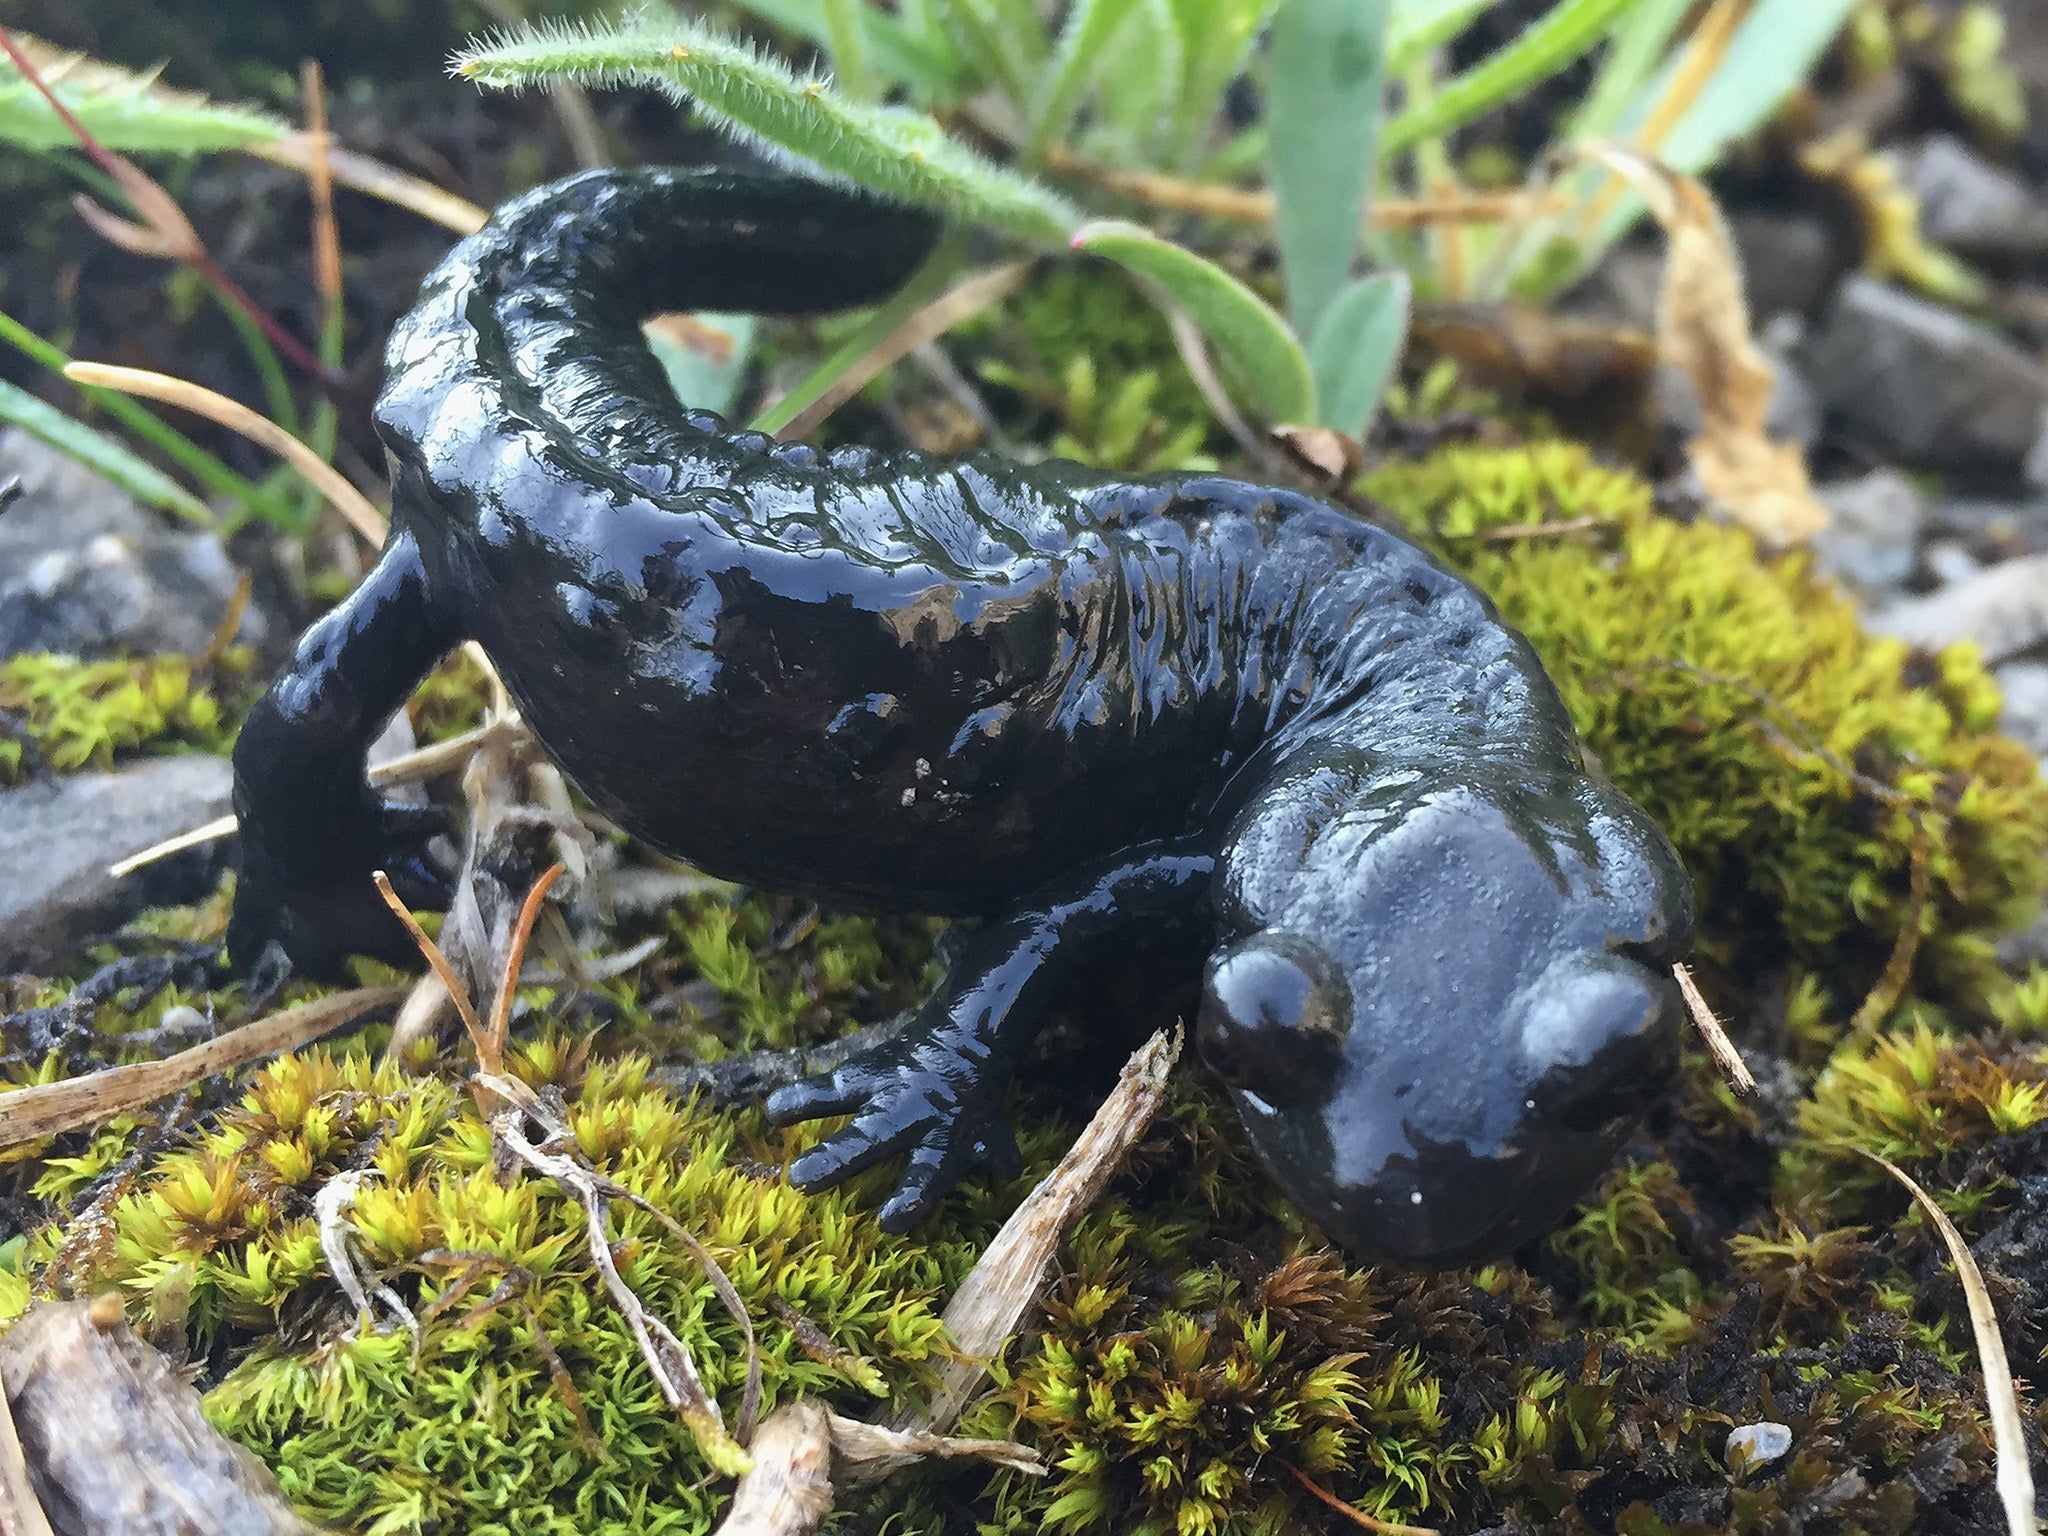 The stem cells mimic how salamander regrowth lost limbs